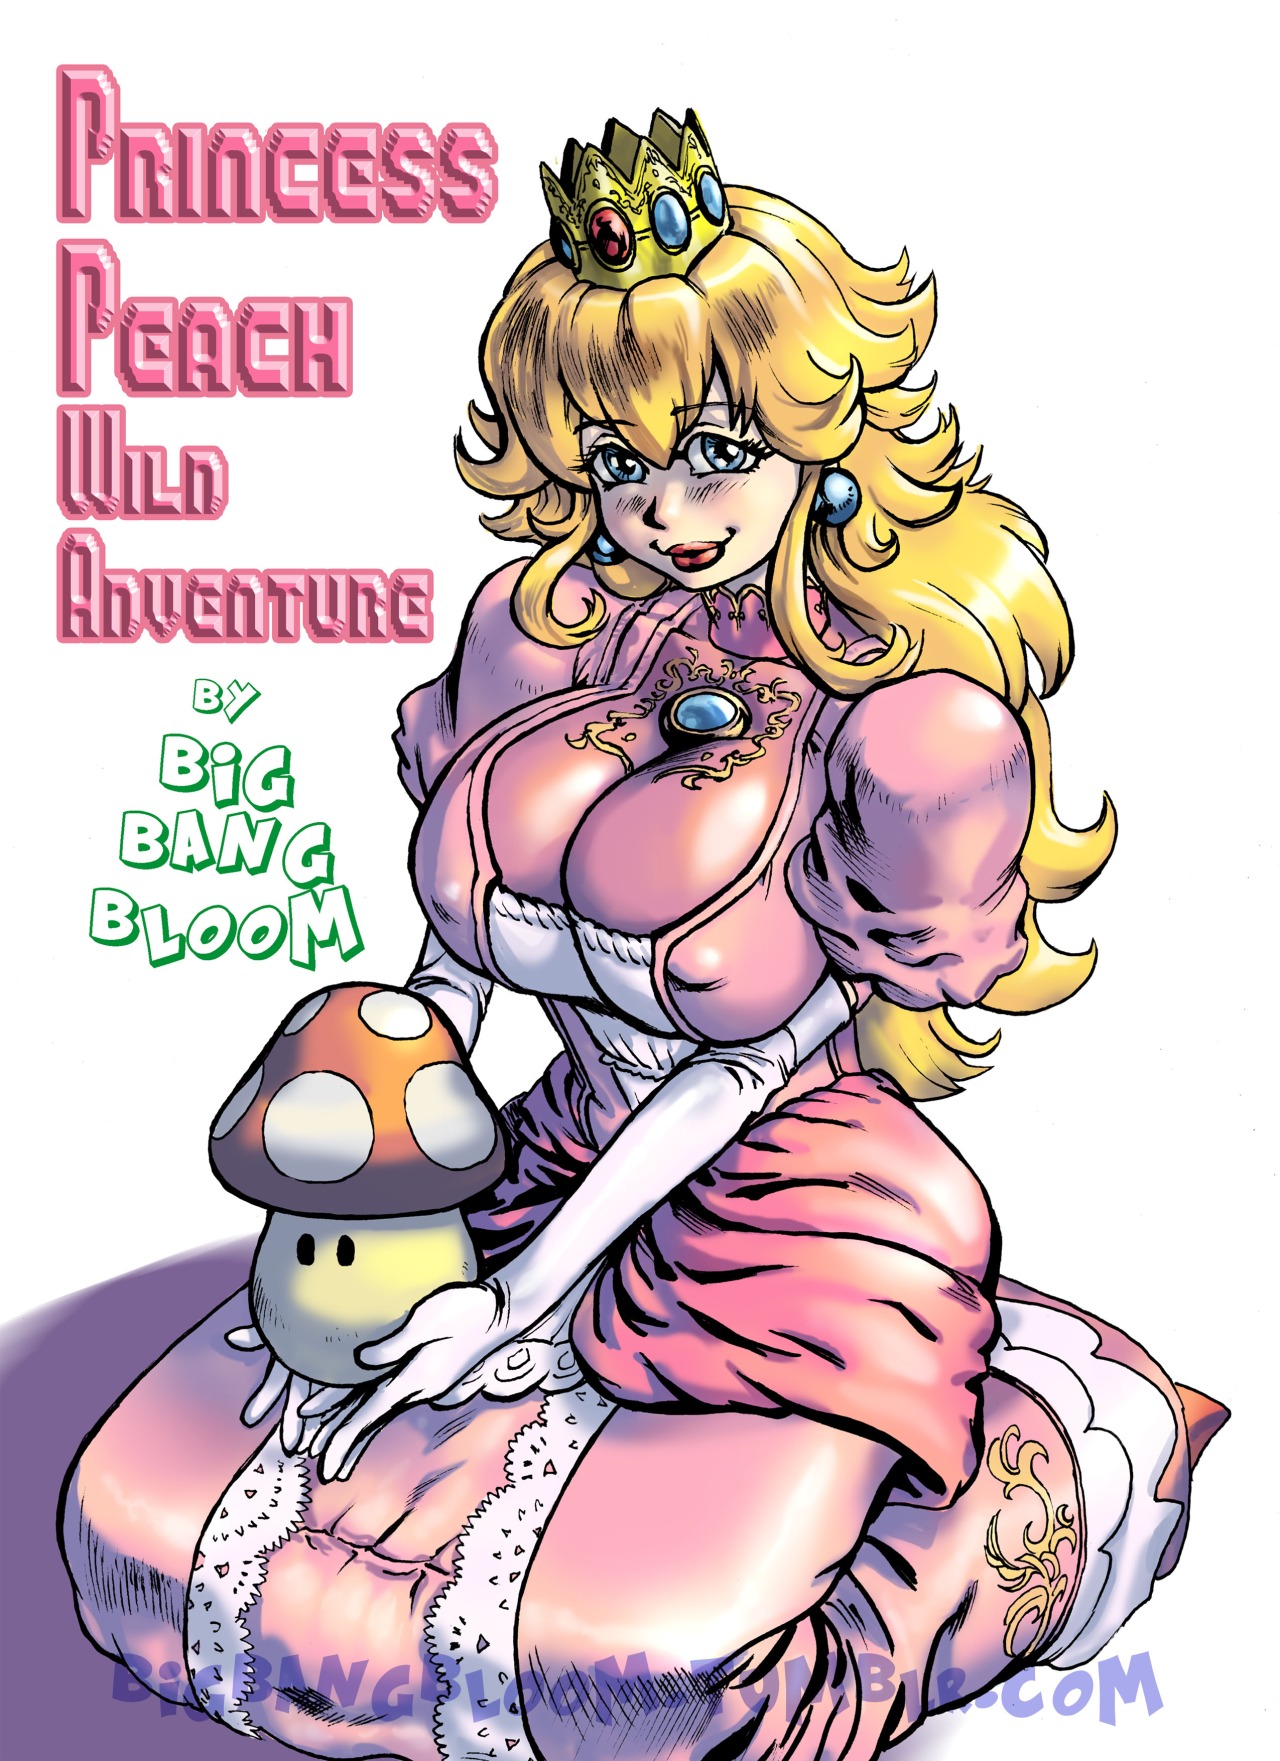 BigBangBloom Princess Peach Wild Adventure00